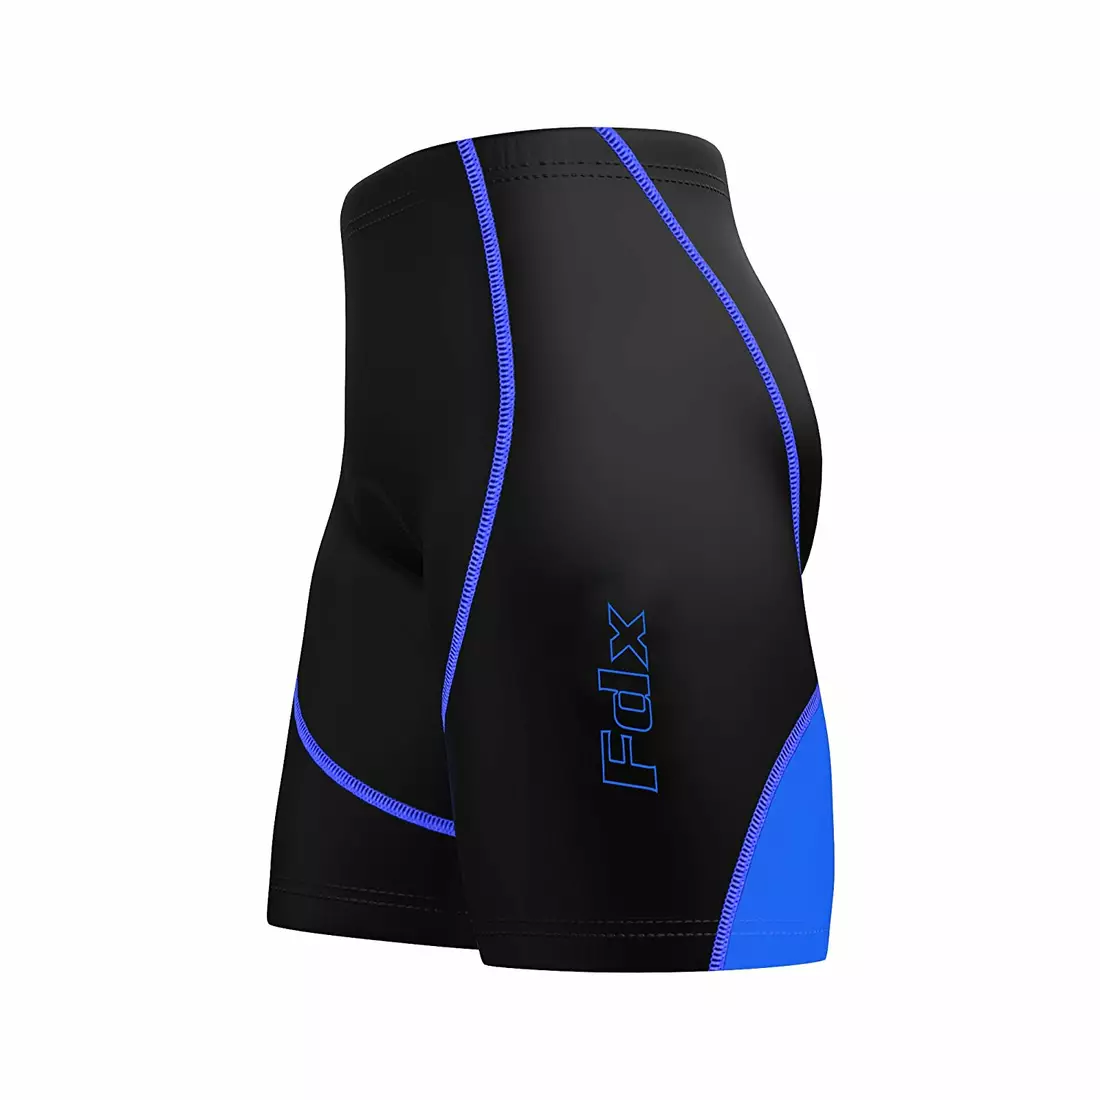 FDX 1610 bib shorts, black and blue